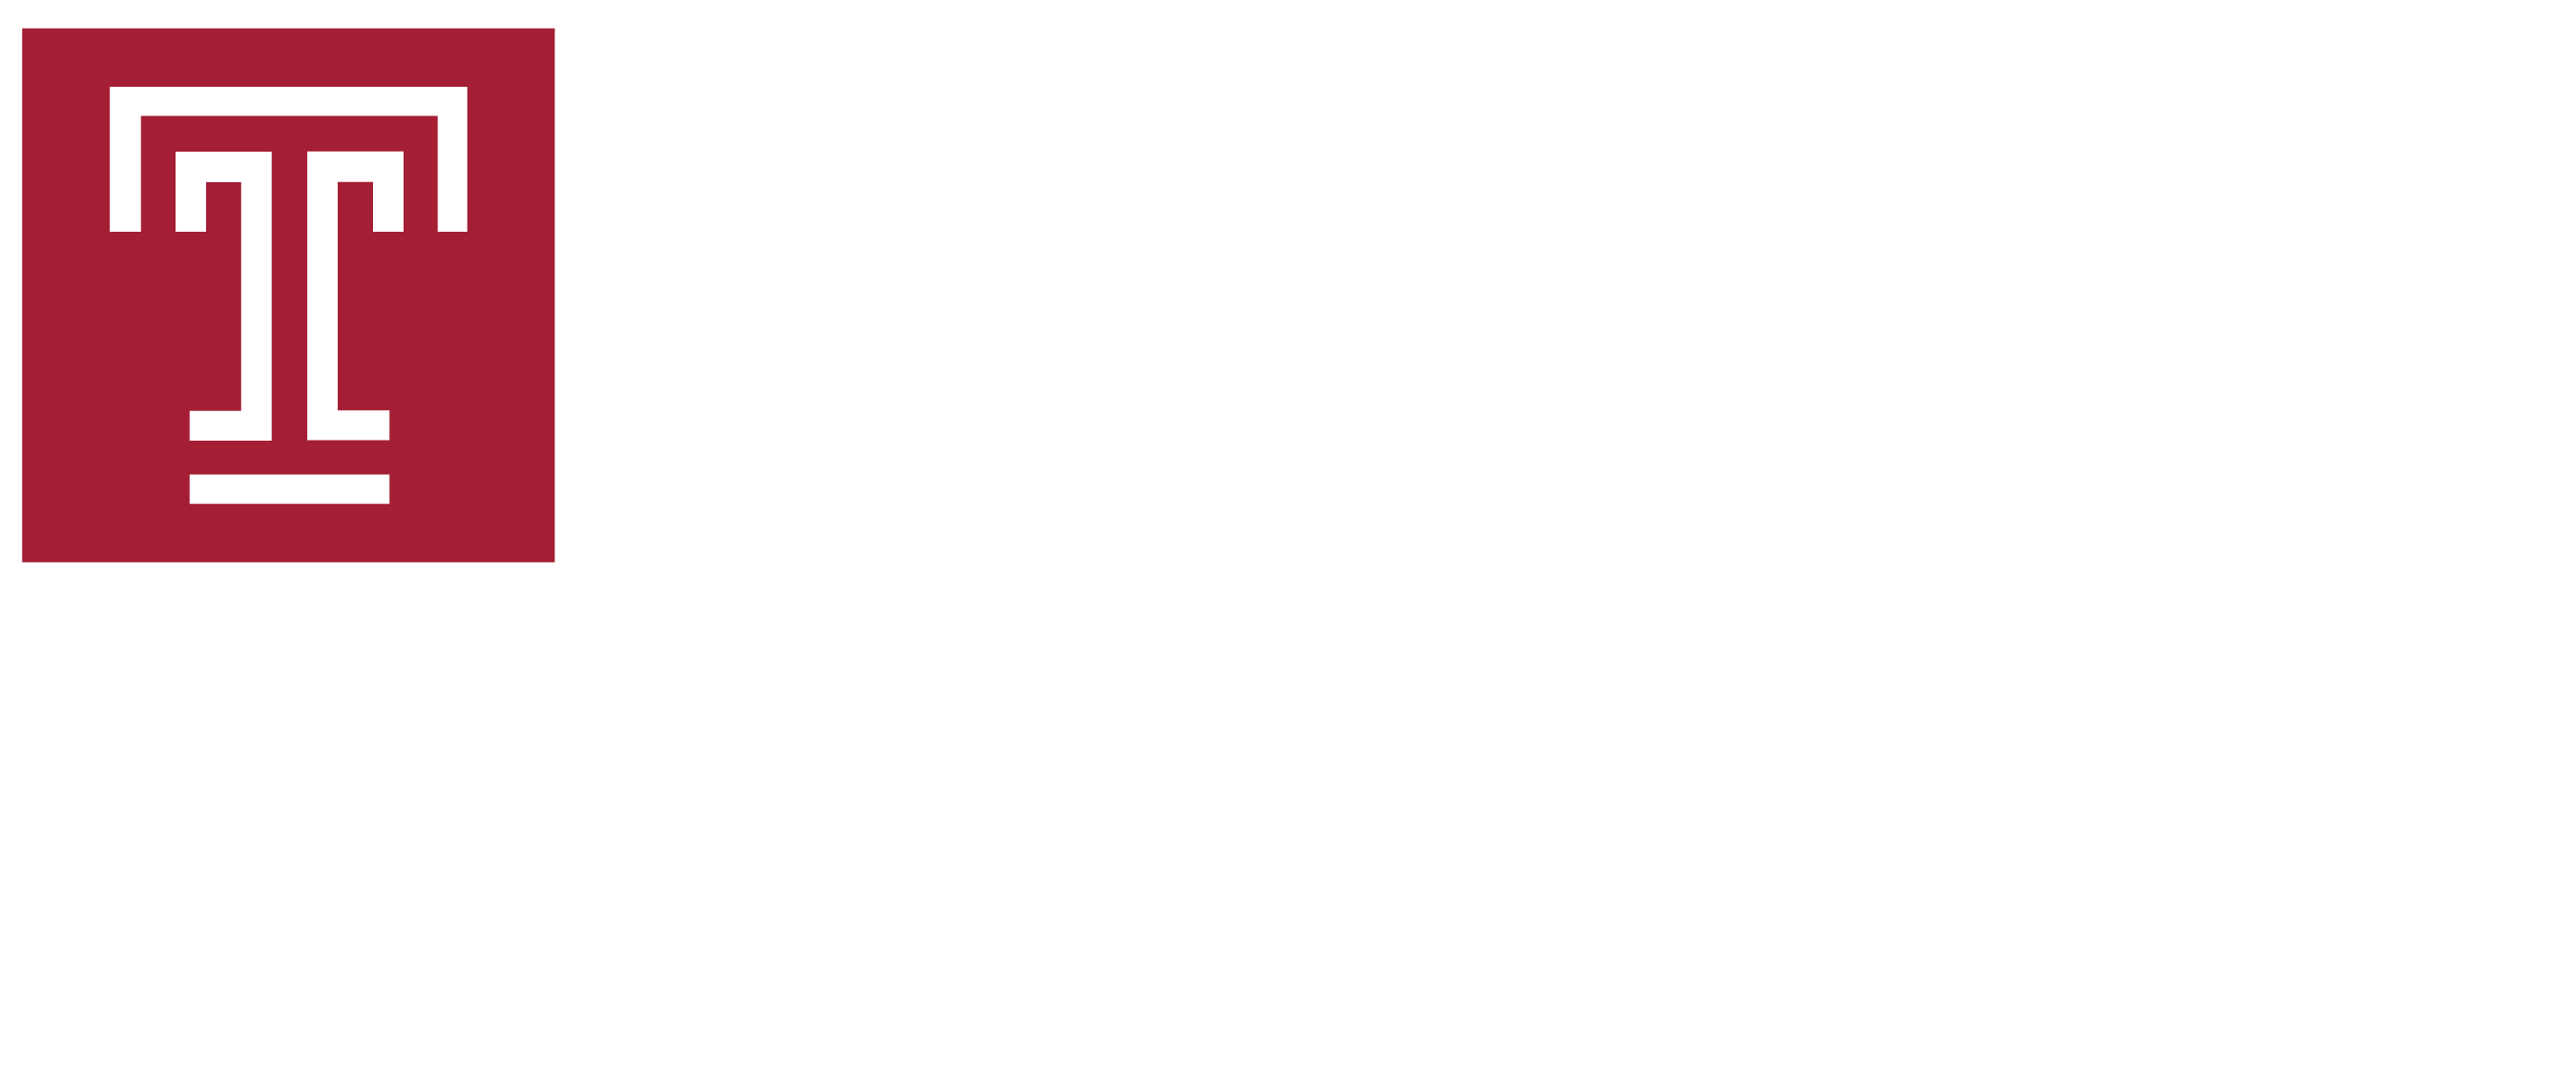 Temple University Lewis Katz School of Medicine